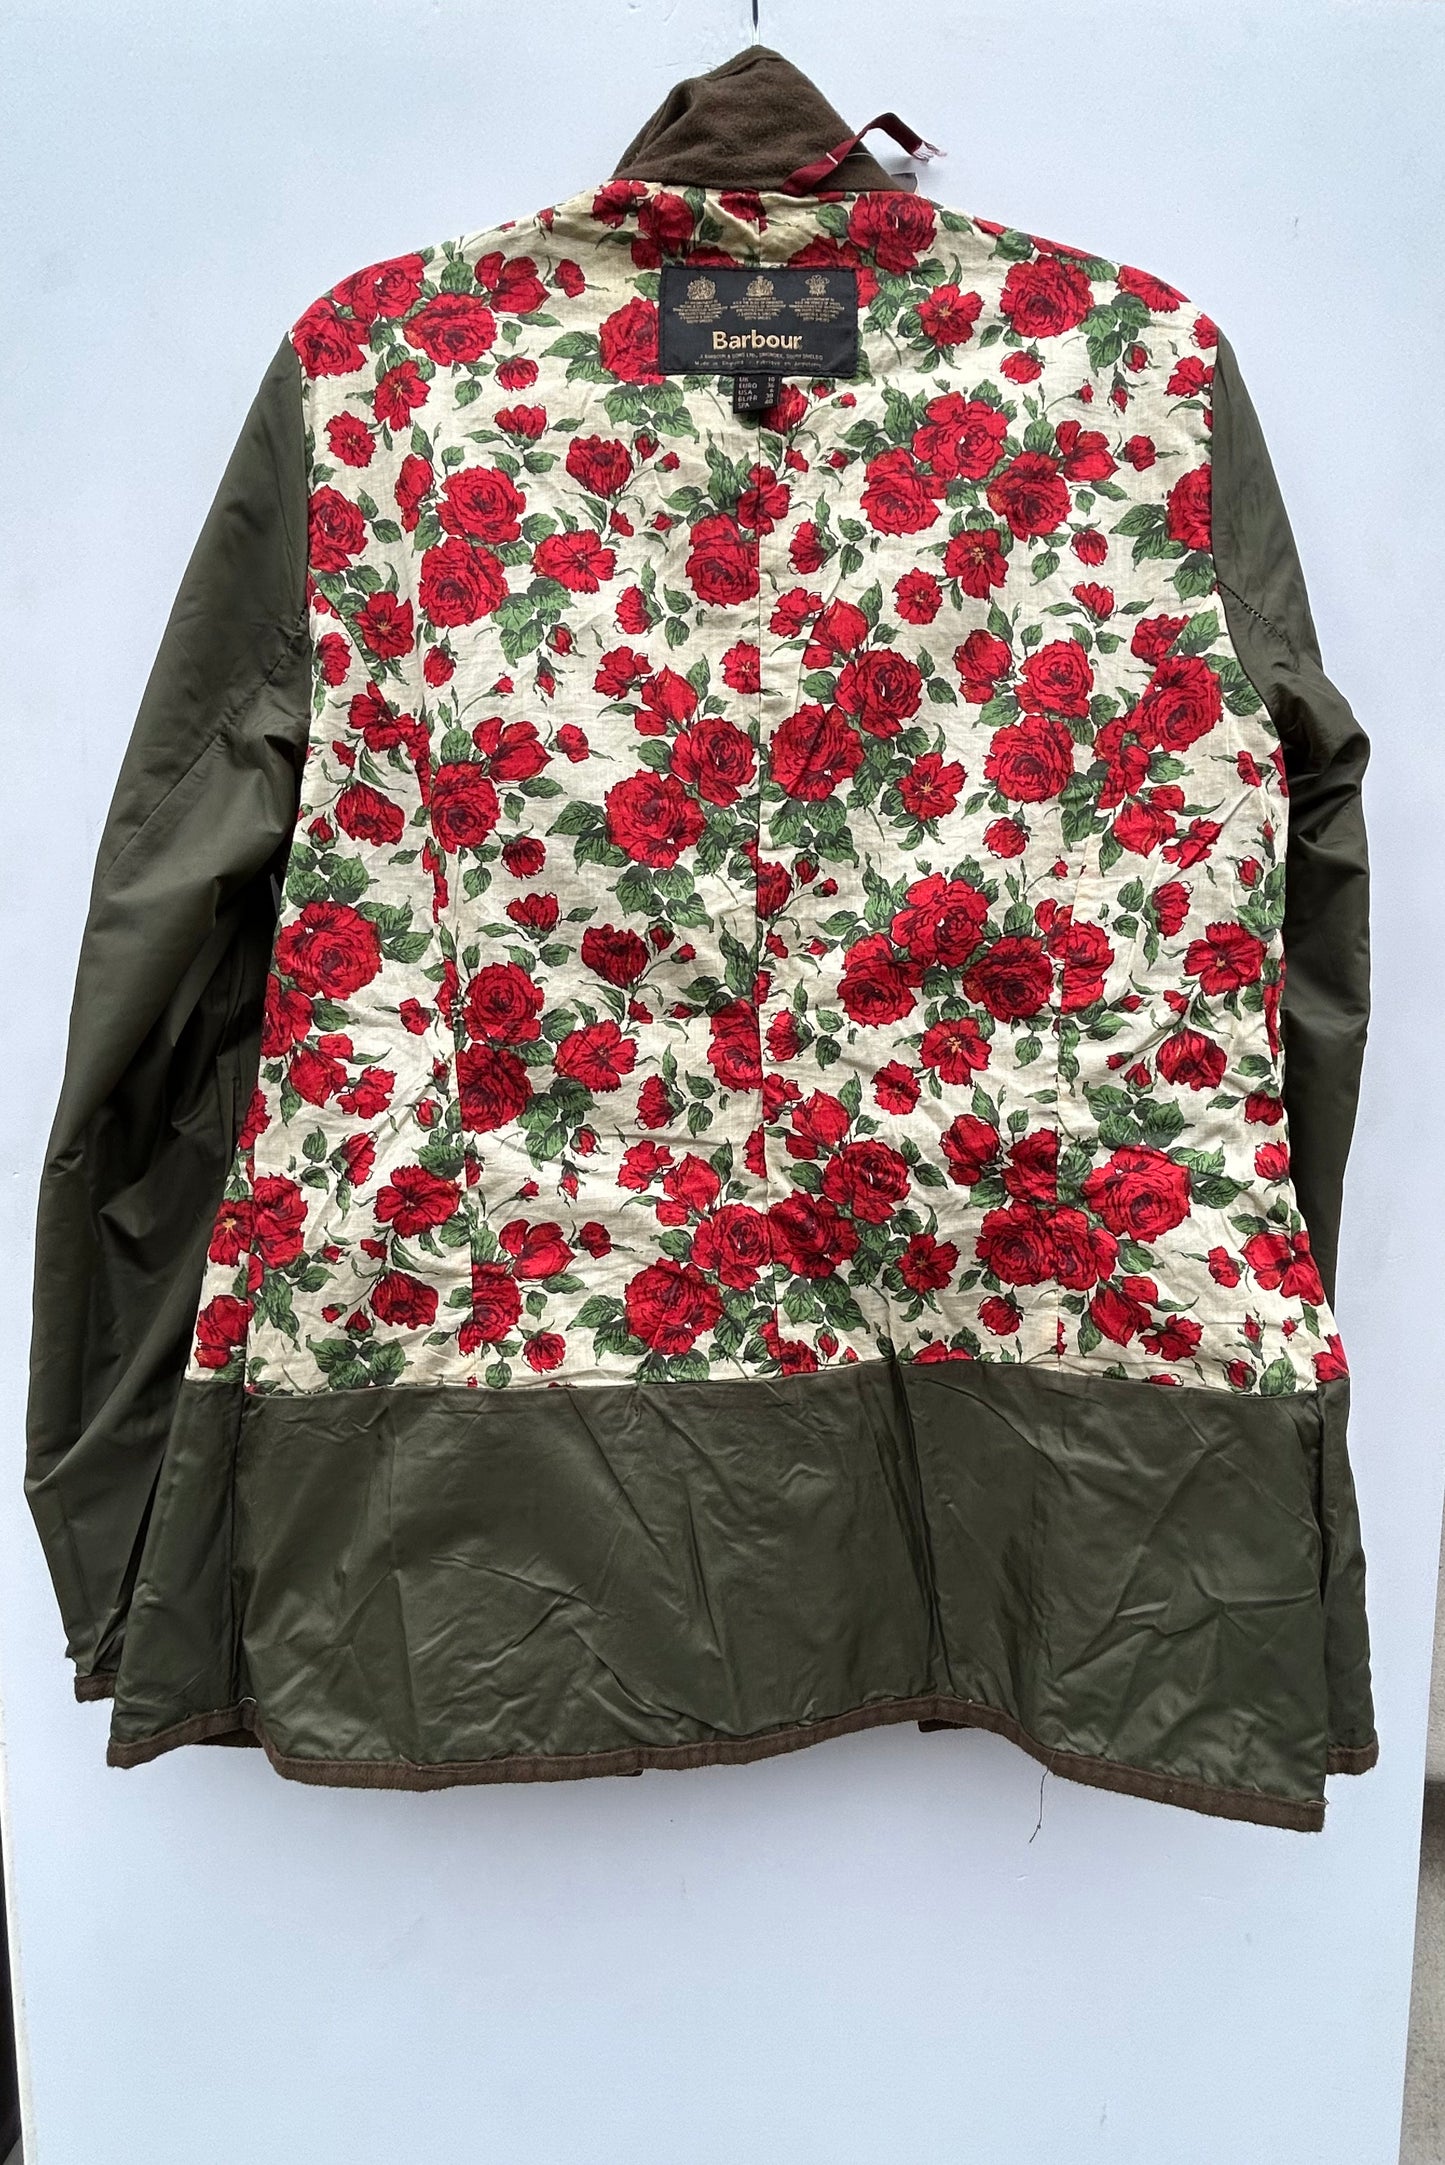 Barbour Giacca corta verde oliva da donna  con rose S Tg. 40 Lady Utility Jacket Size UK10